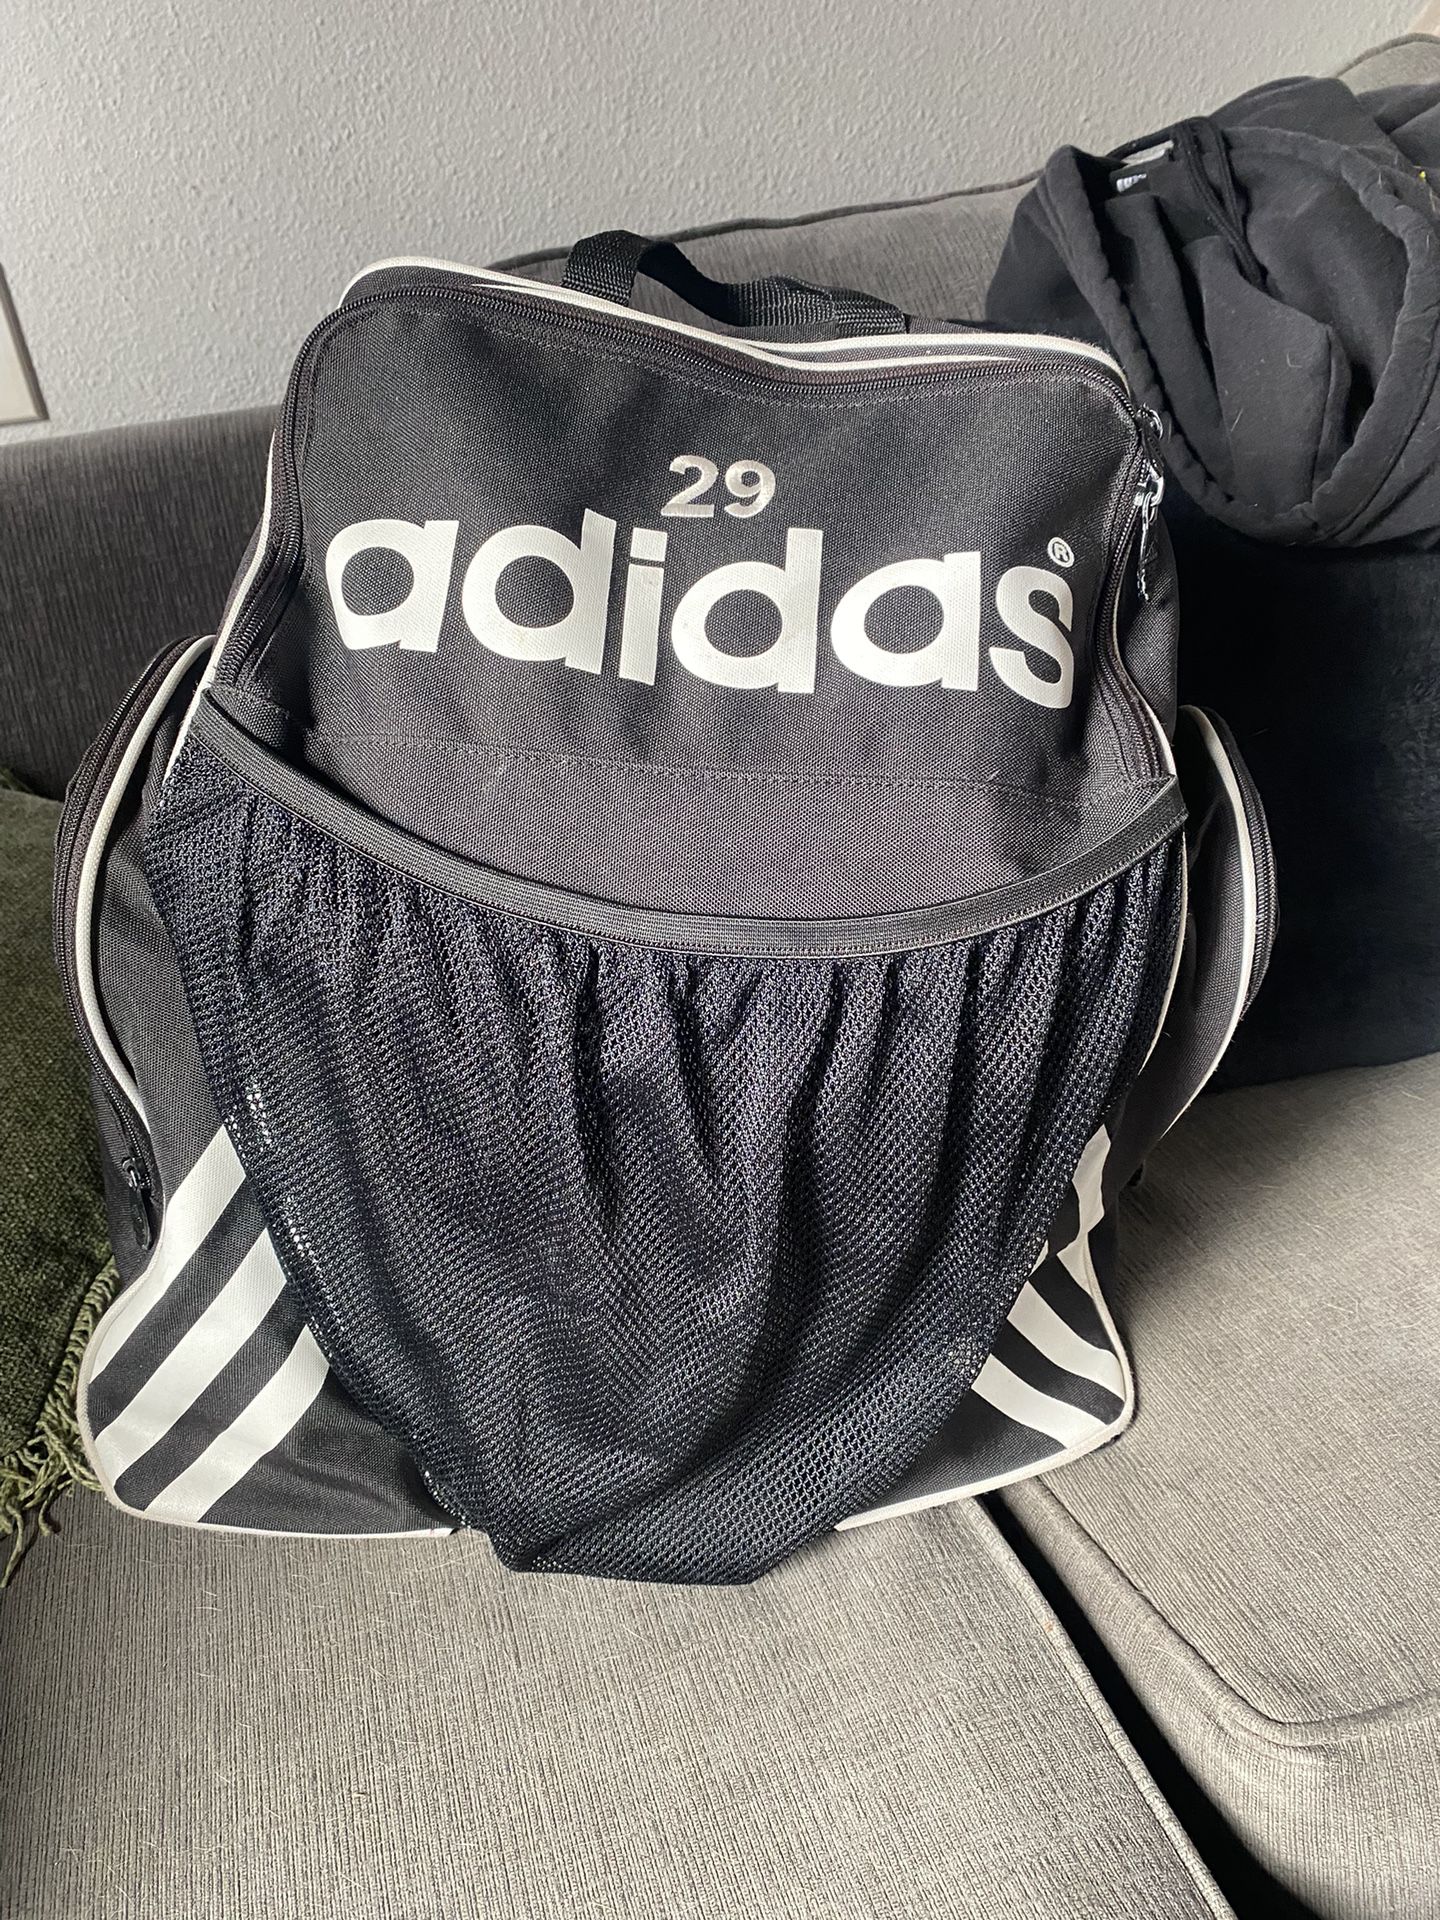 Adidas Soccer Bag/Backpack